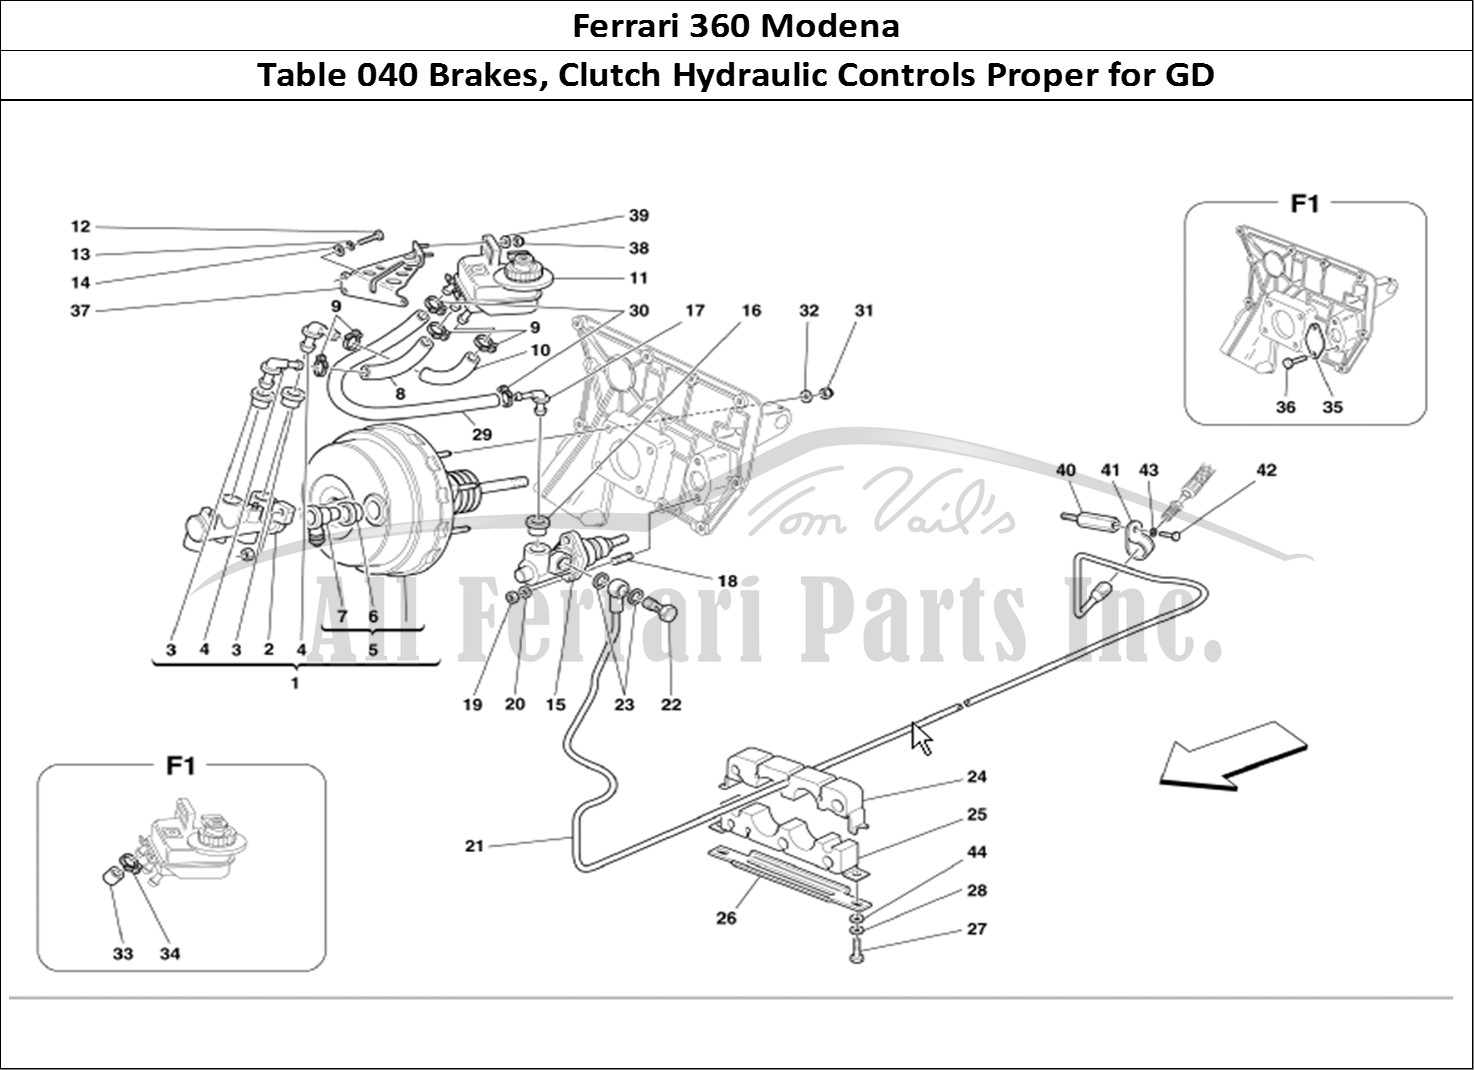 Ferrari Parts Ferrari 360 Modena Page 040 Brakes and Clutch Hydraul